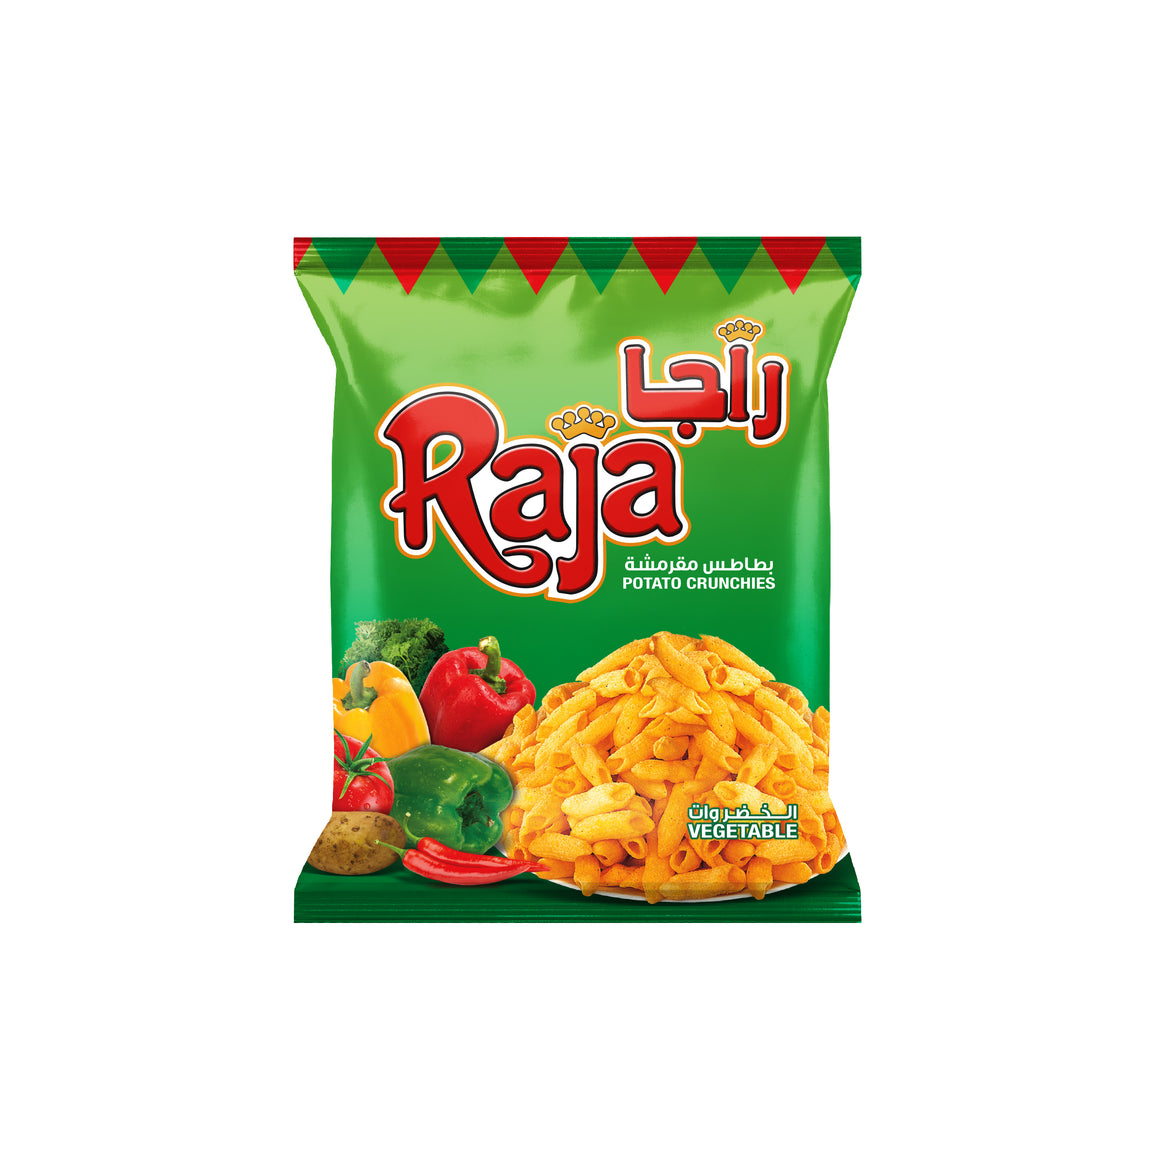 Raja Potato Crunchies Vegetable Flavor 15gm